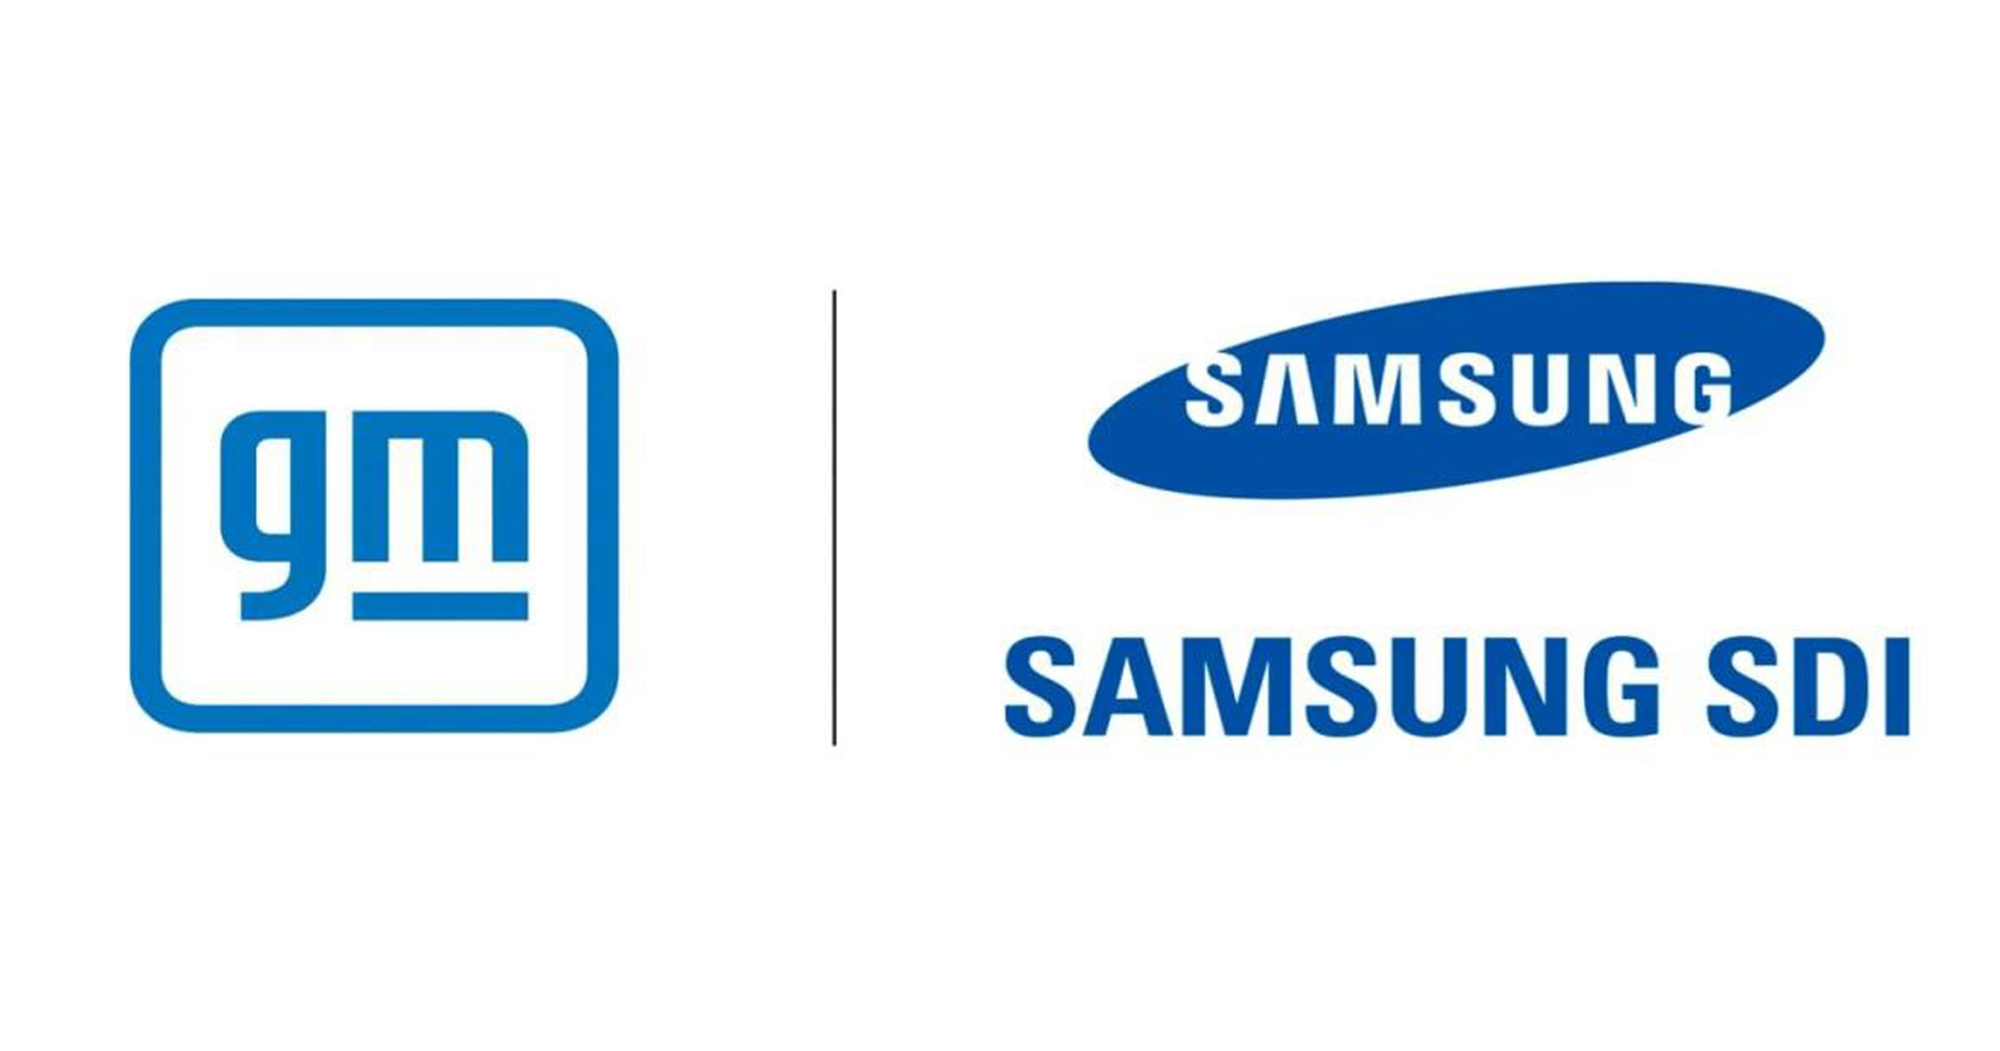 GM និង Samsung ចាប់ដៃគ្នាពង្រឹងគុណភាពផលិតអាគុយរថយន្តអគ្គិសនីនៅអាមេរិក